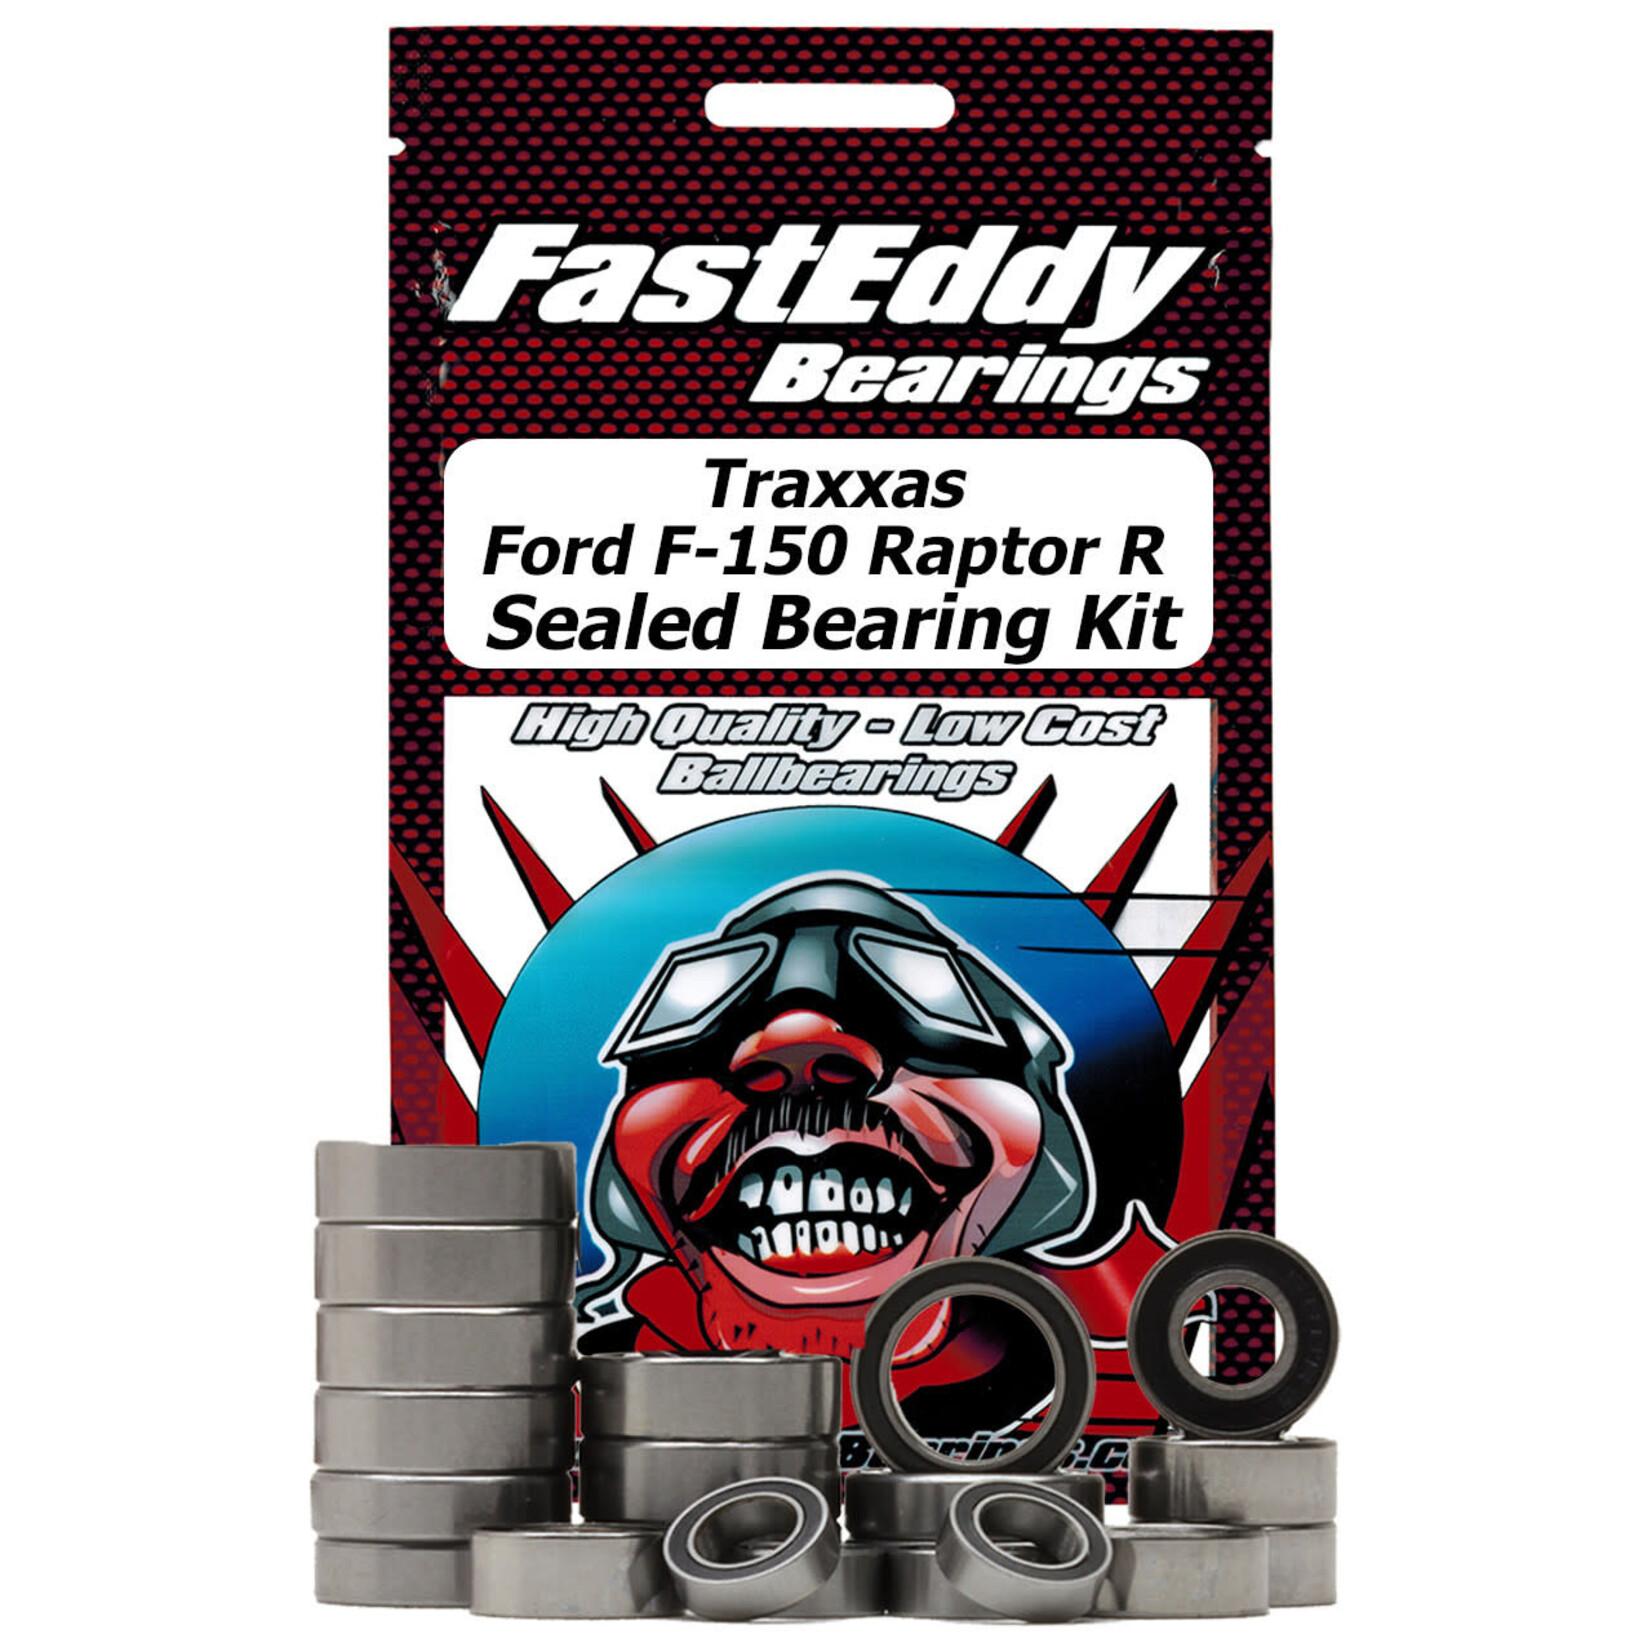 FastEddy FastEddy Traxxas Ford F-150 Raptor R Sealed Bearing Kit #TFE8775